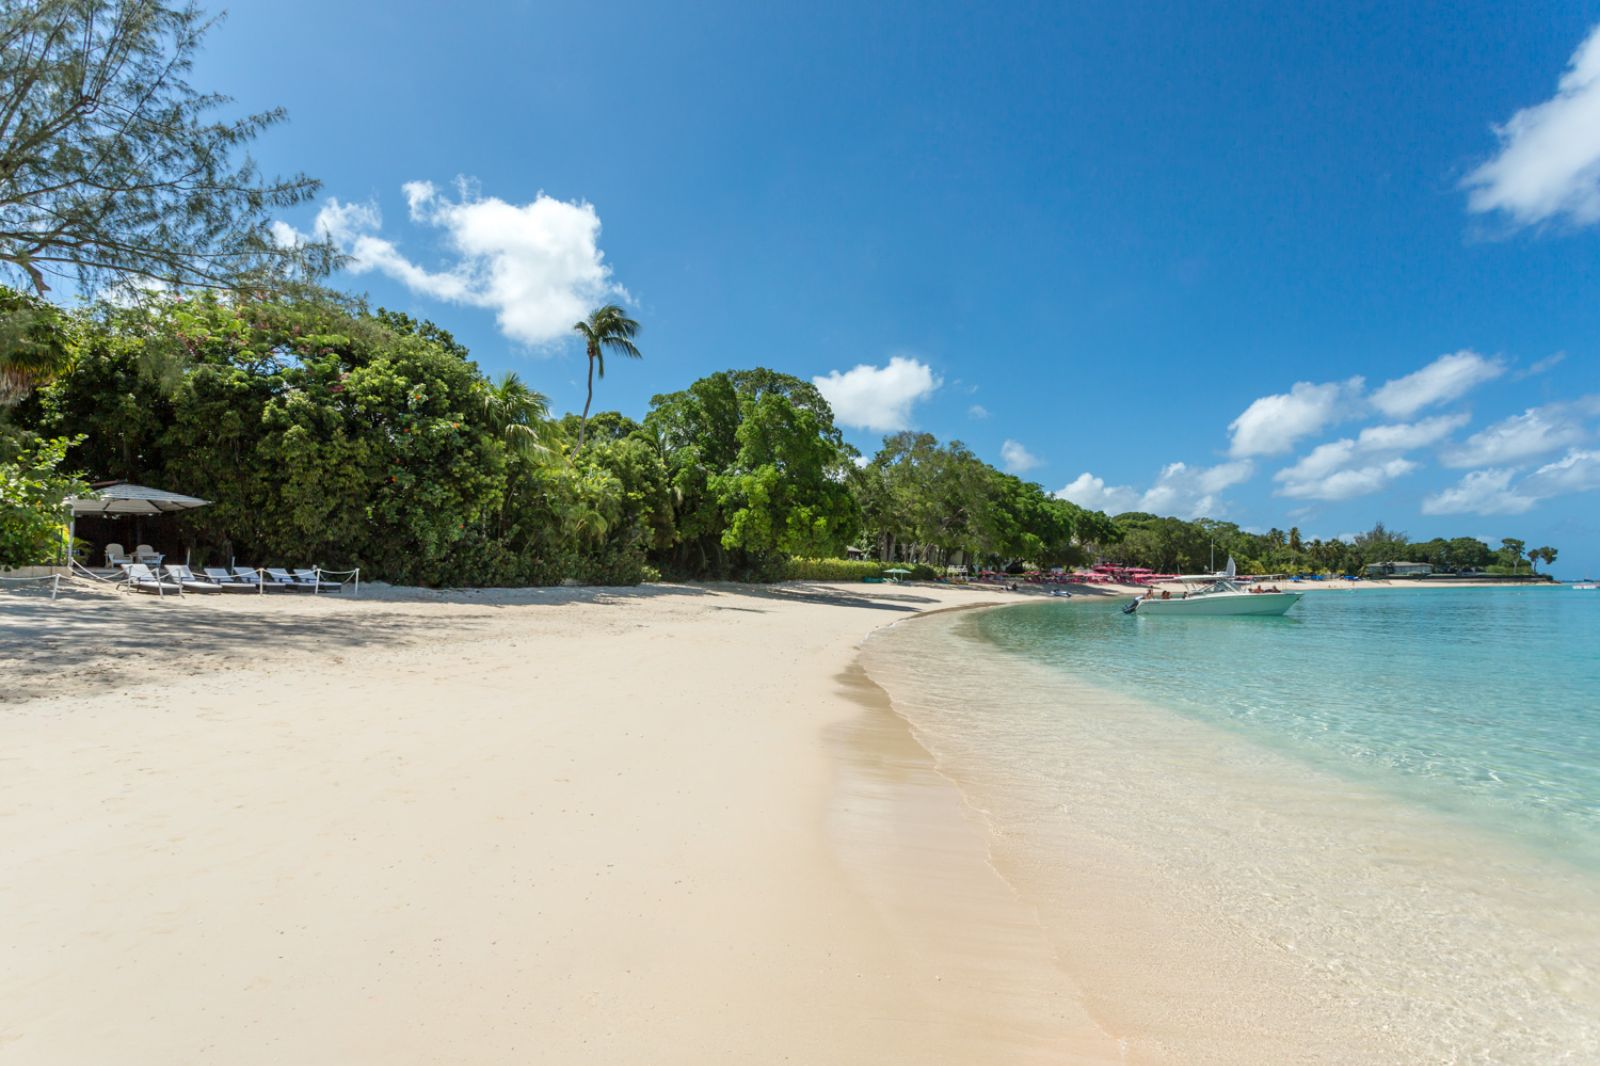 Beach near Bluff House in Barbados